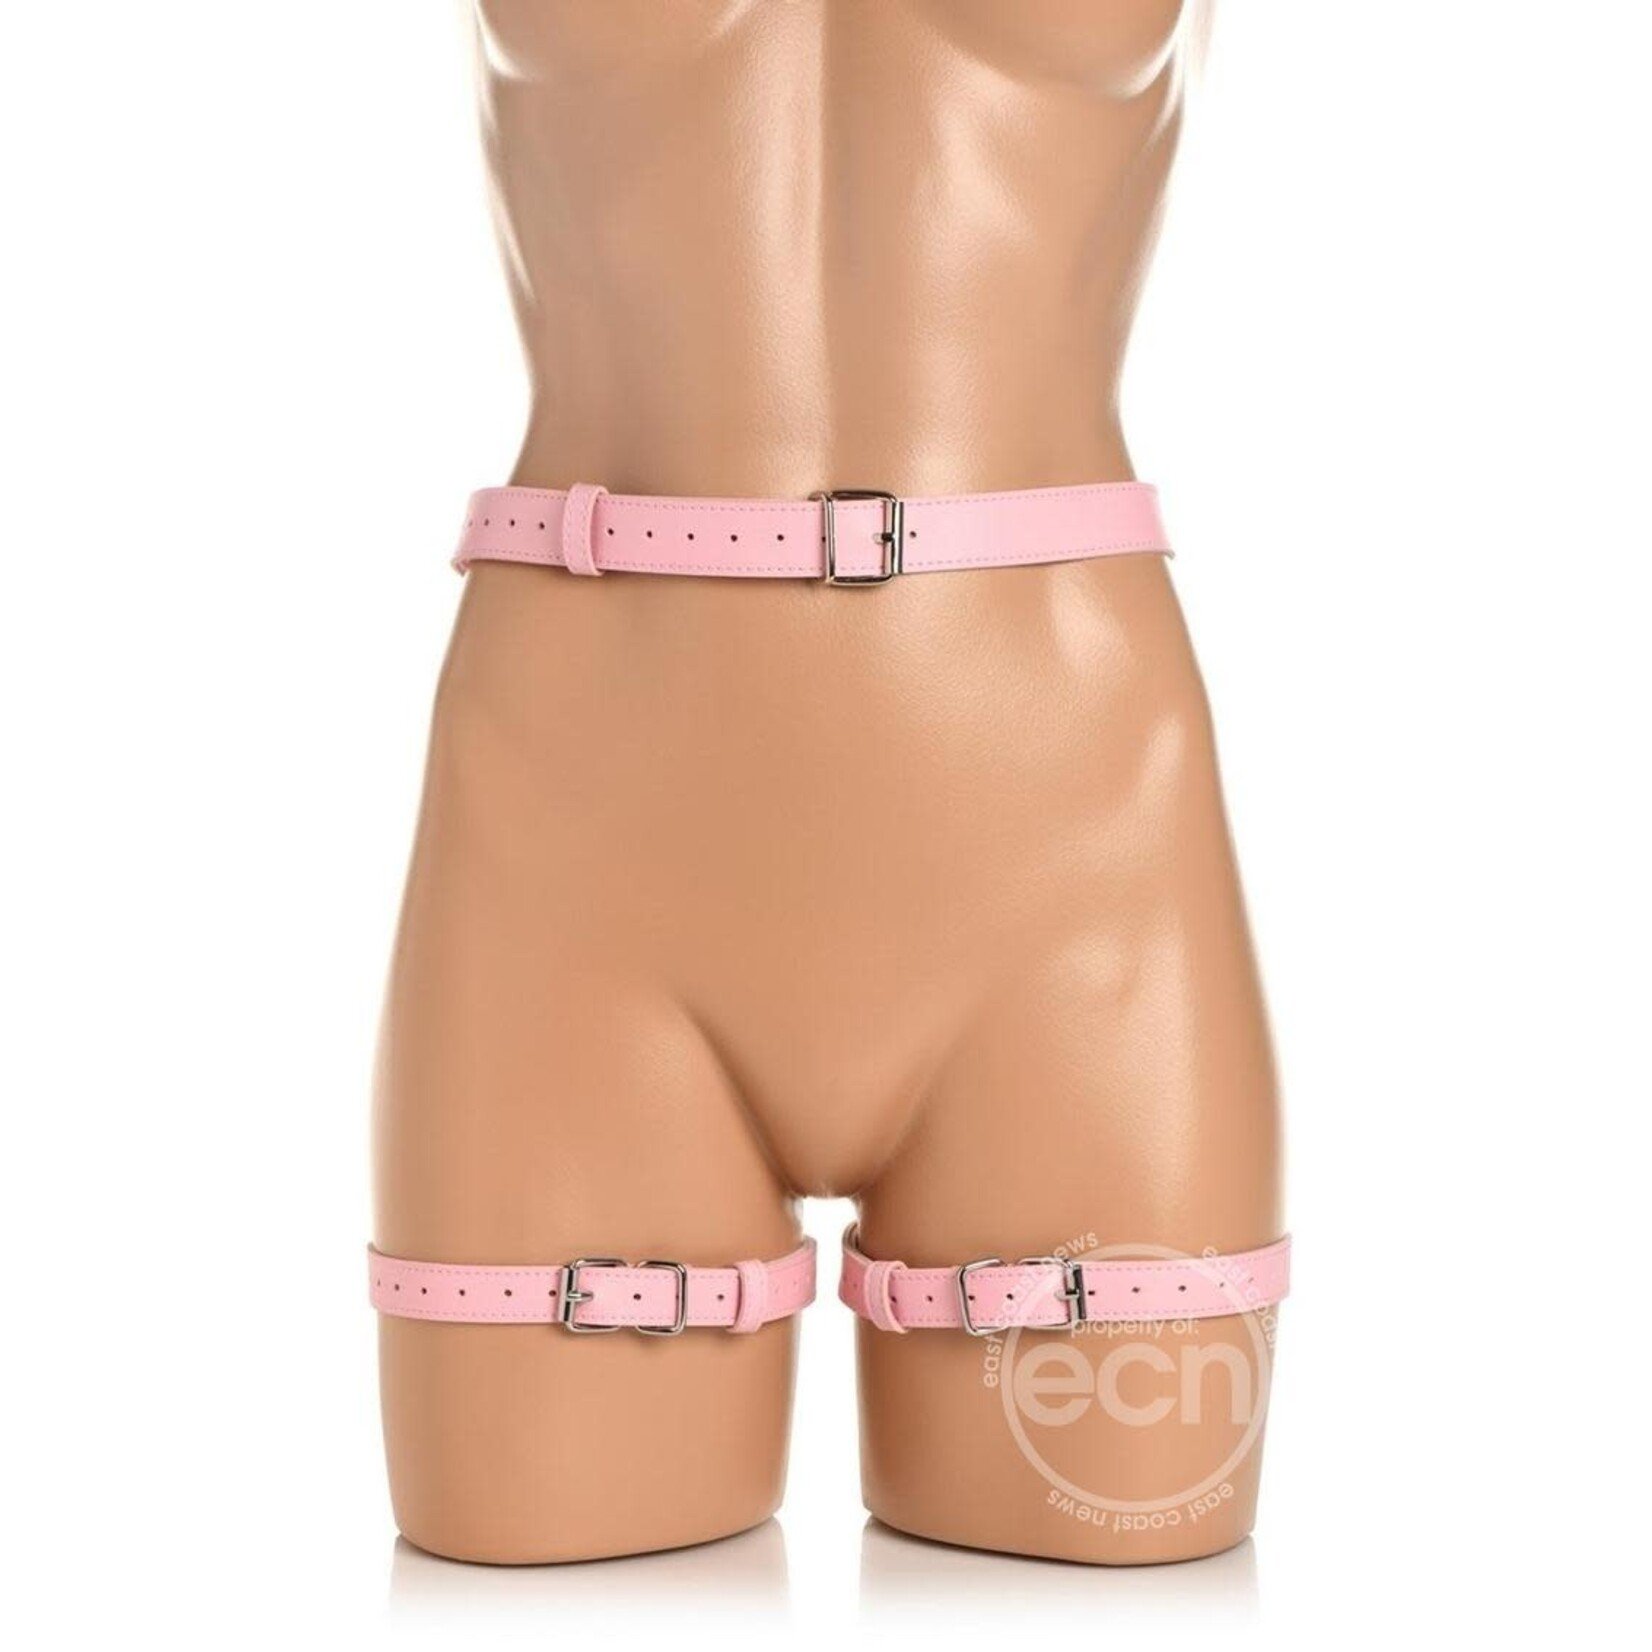 Strict Bondage Harness with Bows - Medium/Large - Pink